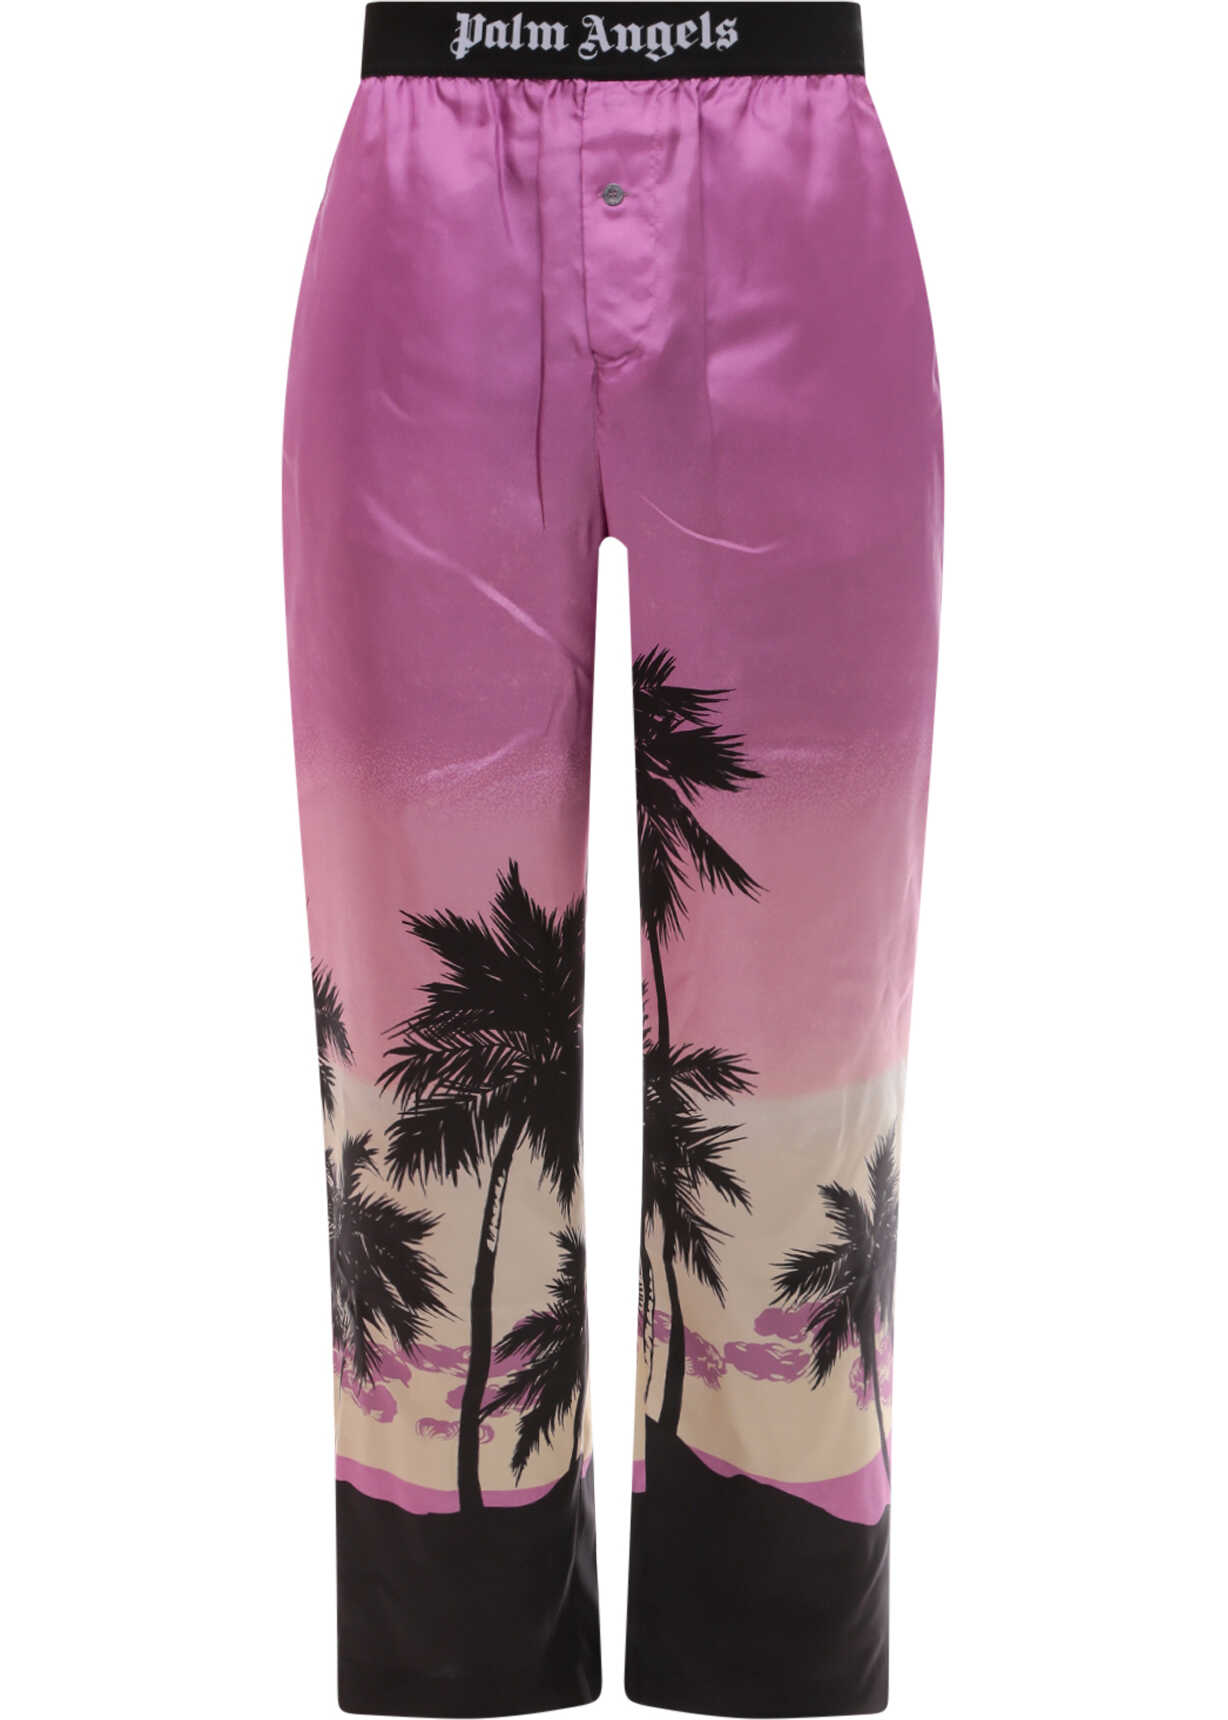 Palm Angels Trouser Purple